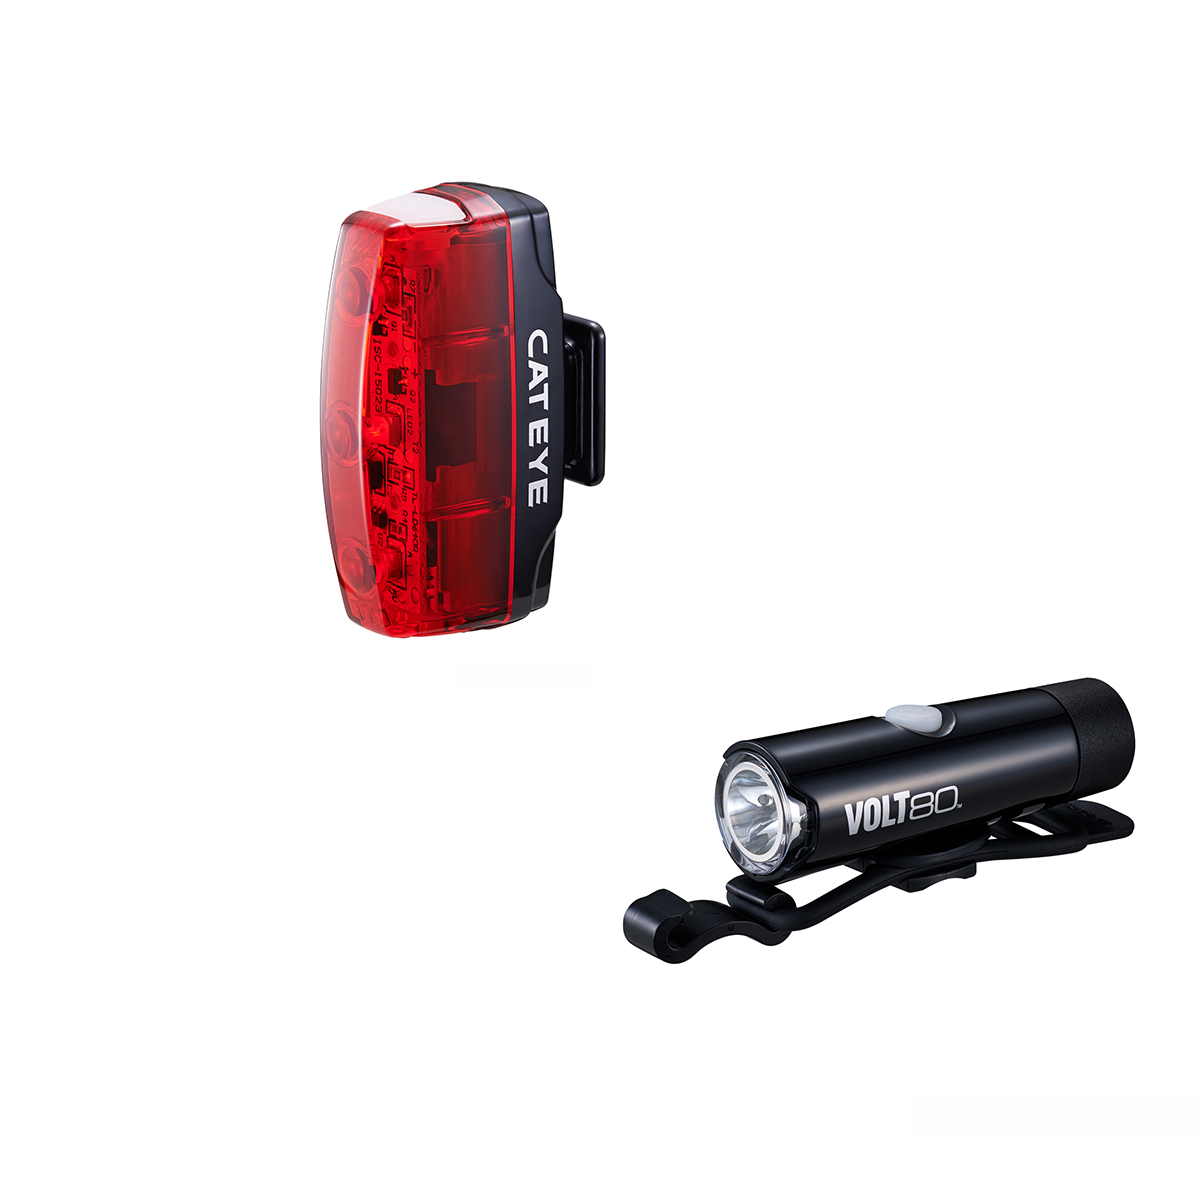 CATEYE Volt 80 front light & rapid micro rear light usb rechargeable light set